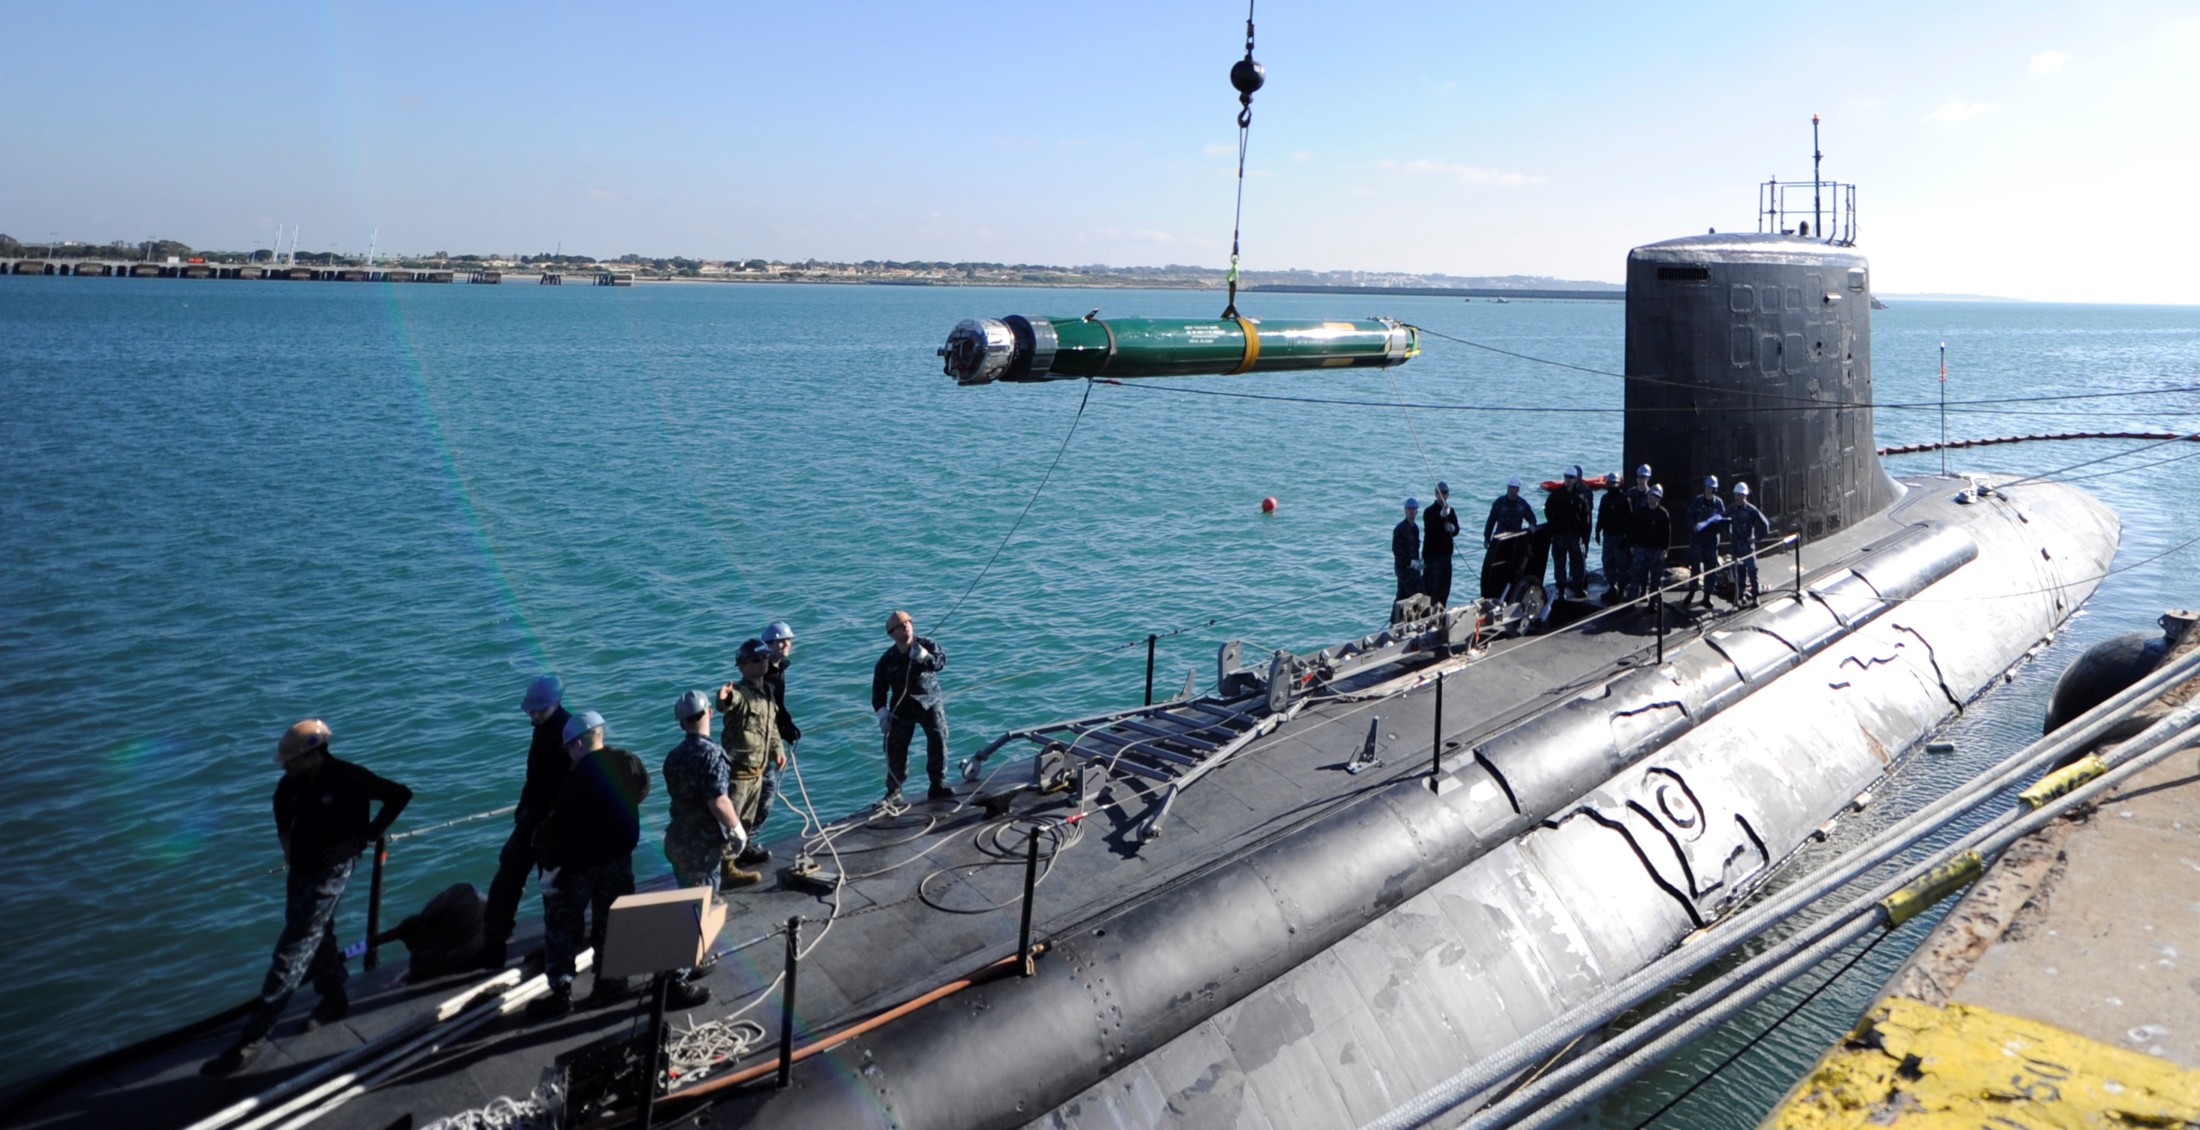 ssn-781 uss california virginia class attack submarine us navy 04 heavy weight torpedo